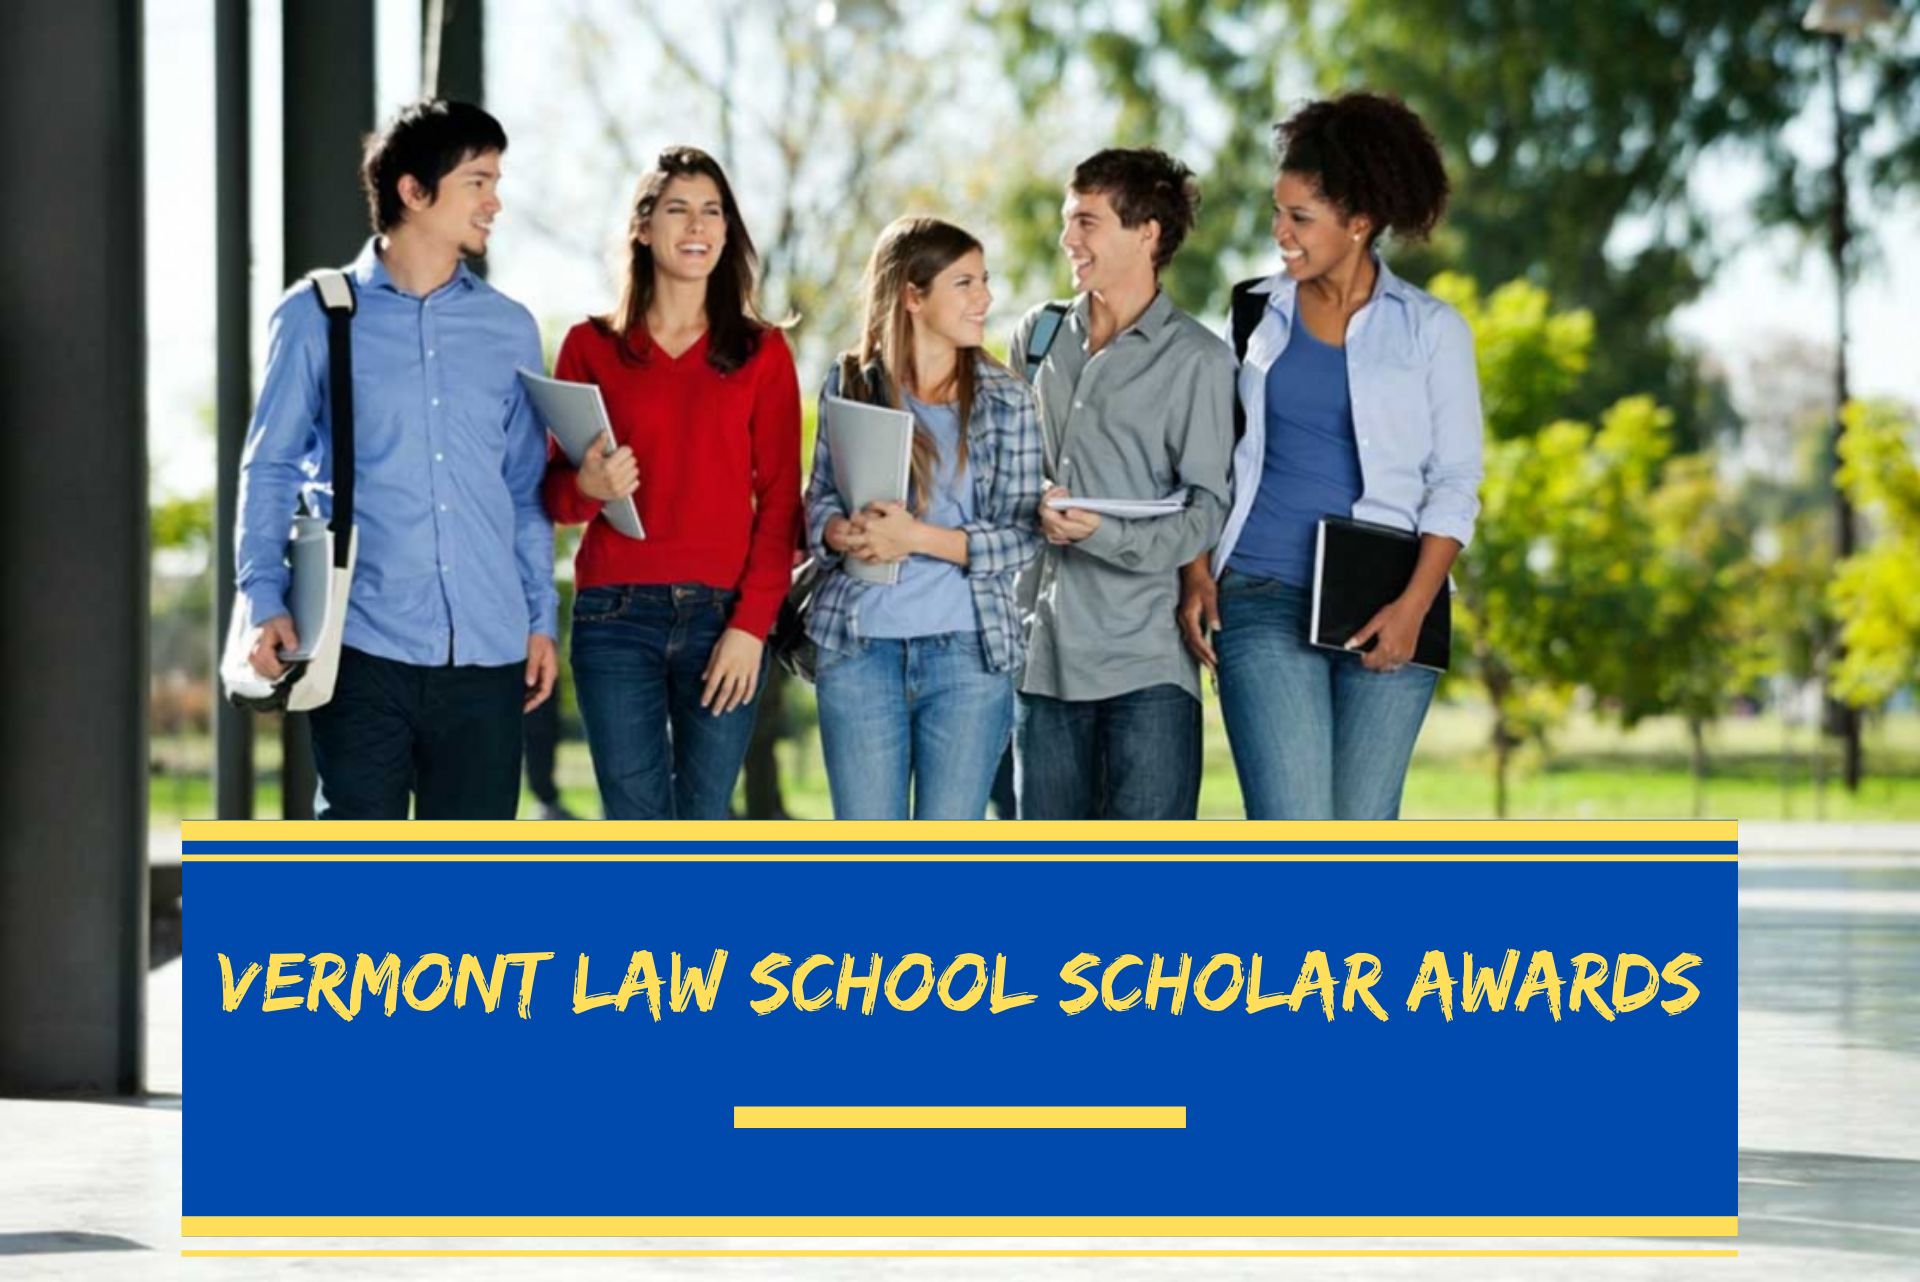 Vermont Law School Scholar Awards